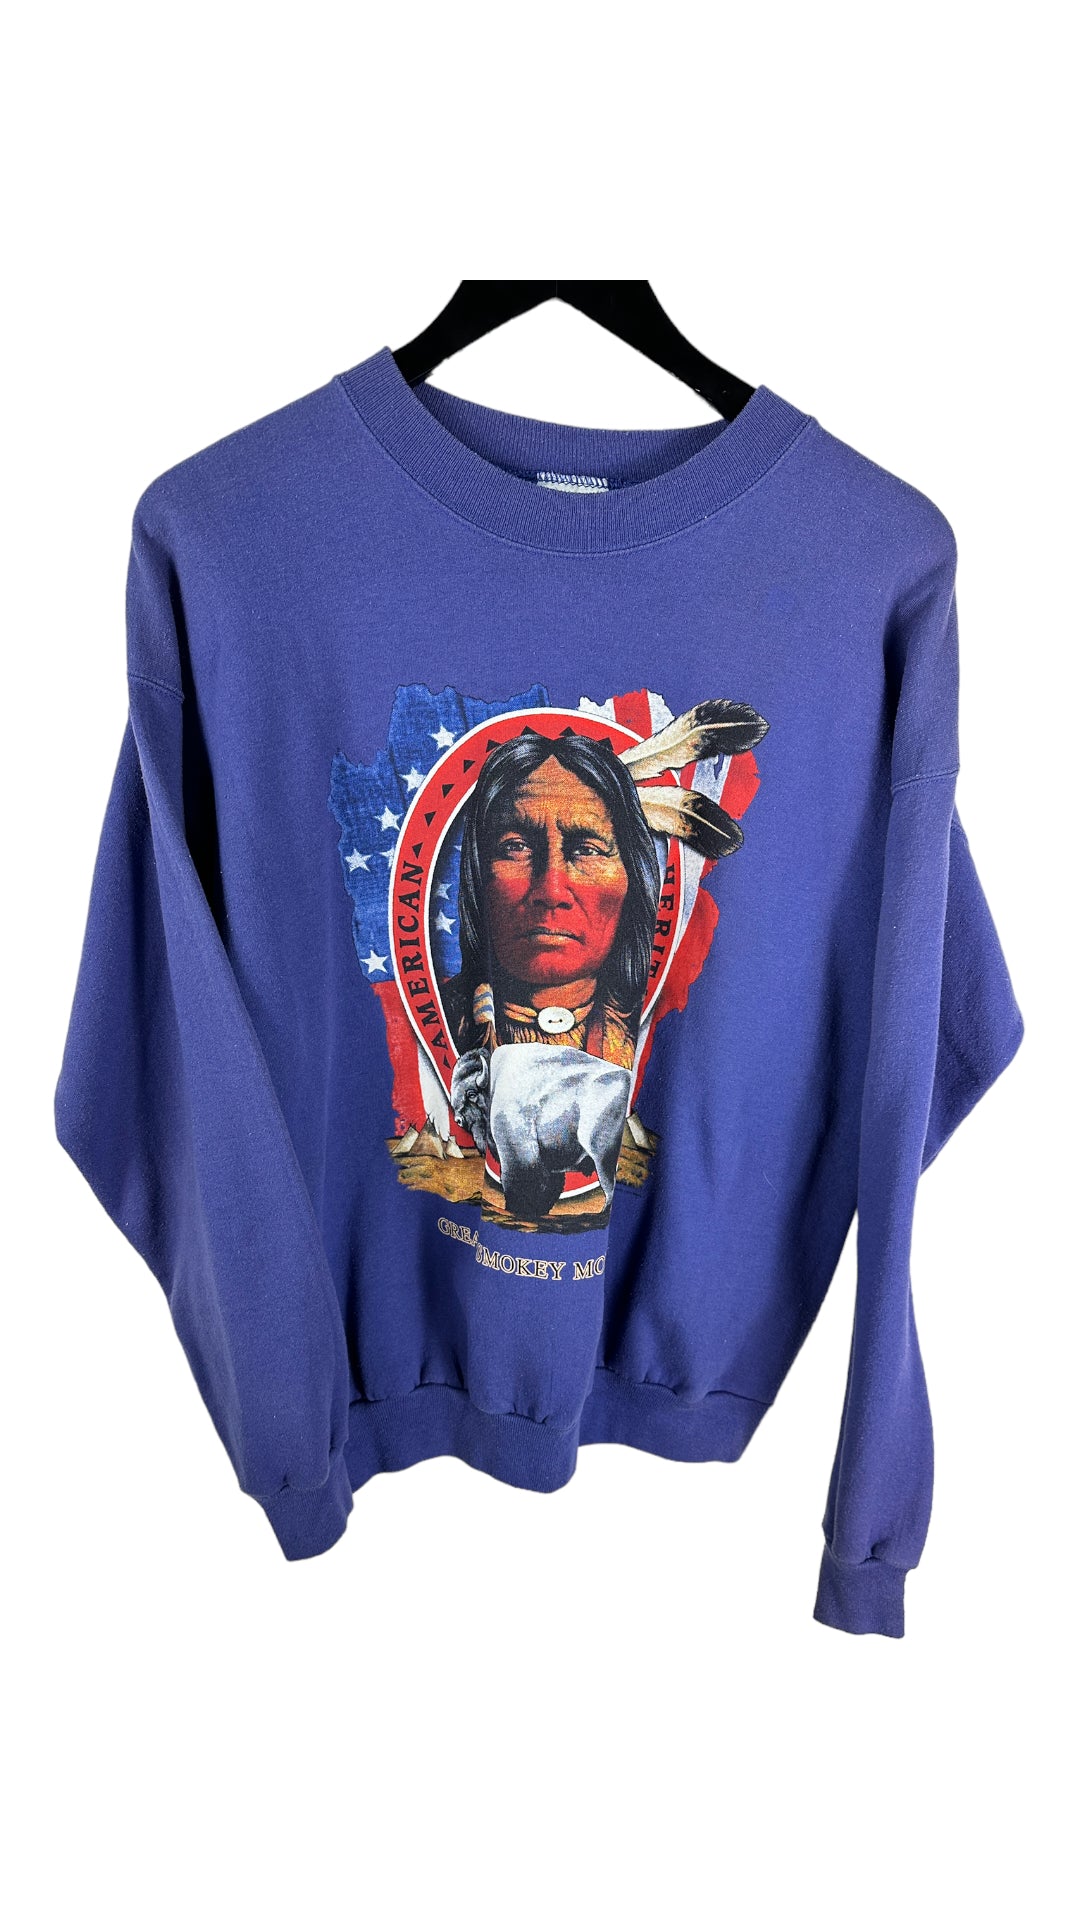 VTG Smokey Mountains Native American Sweatshirt Sz Med